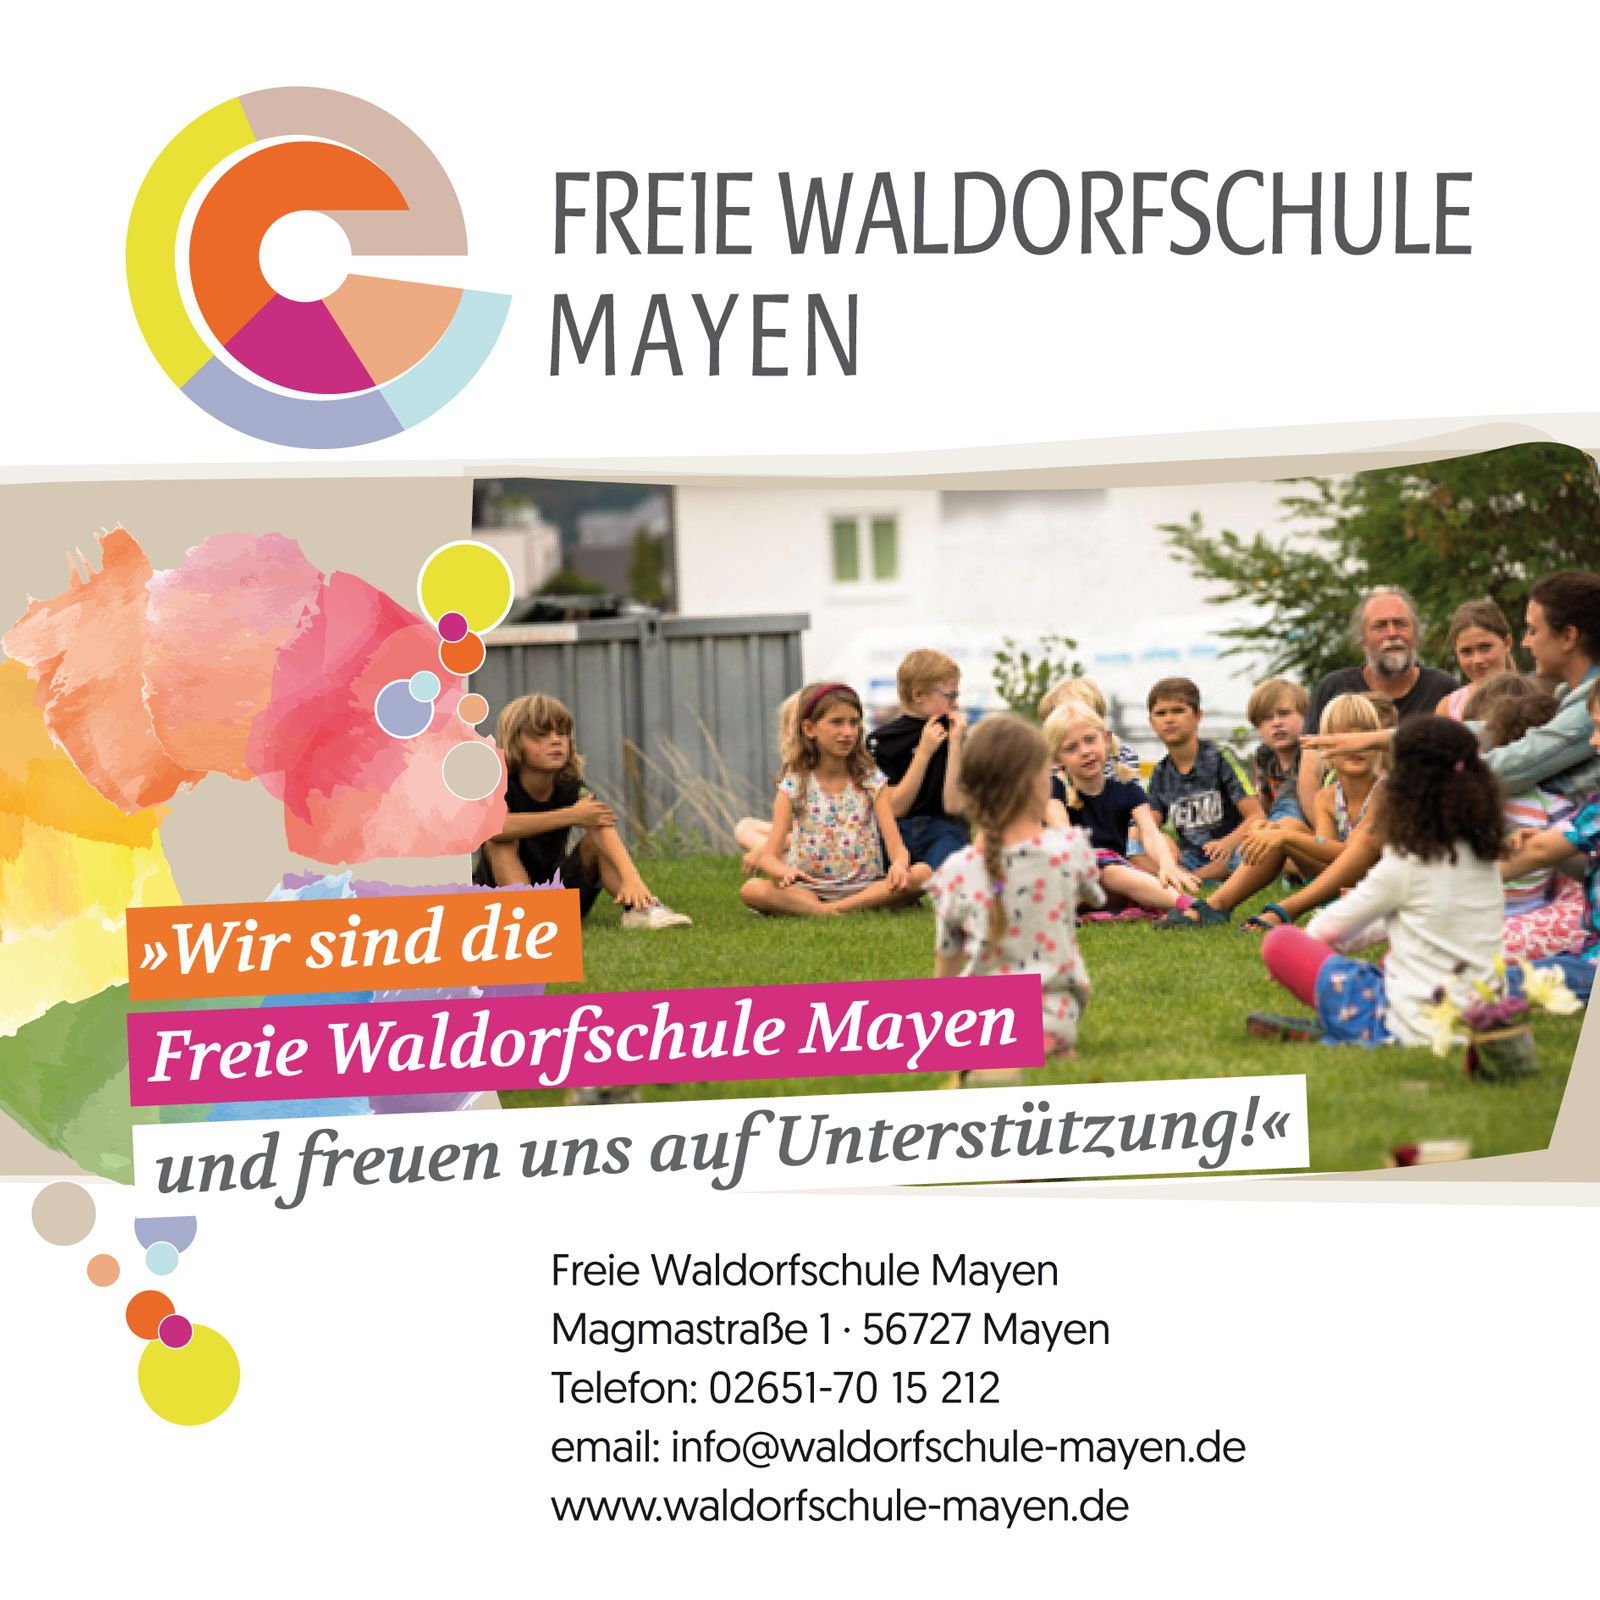 Freie Waldorfschule Mayen